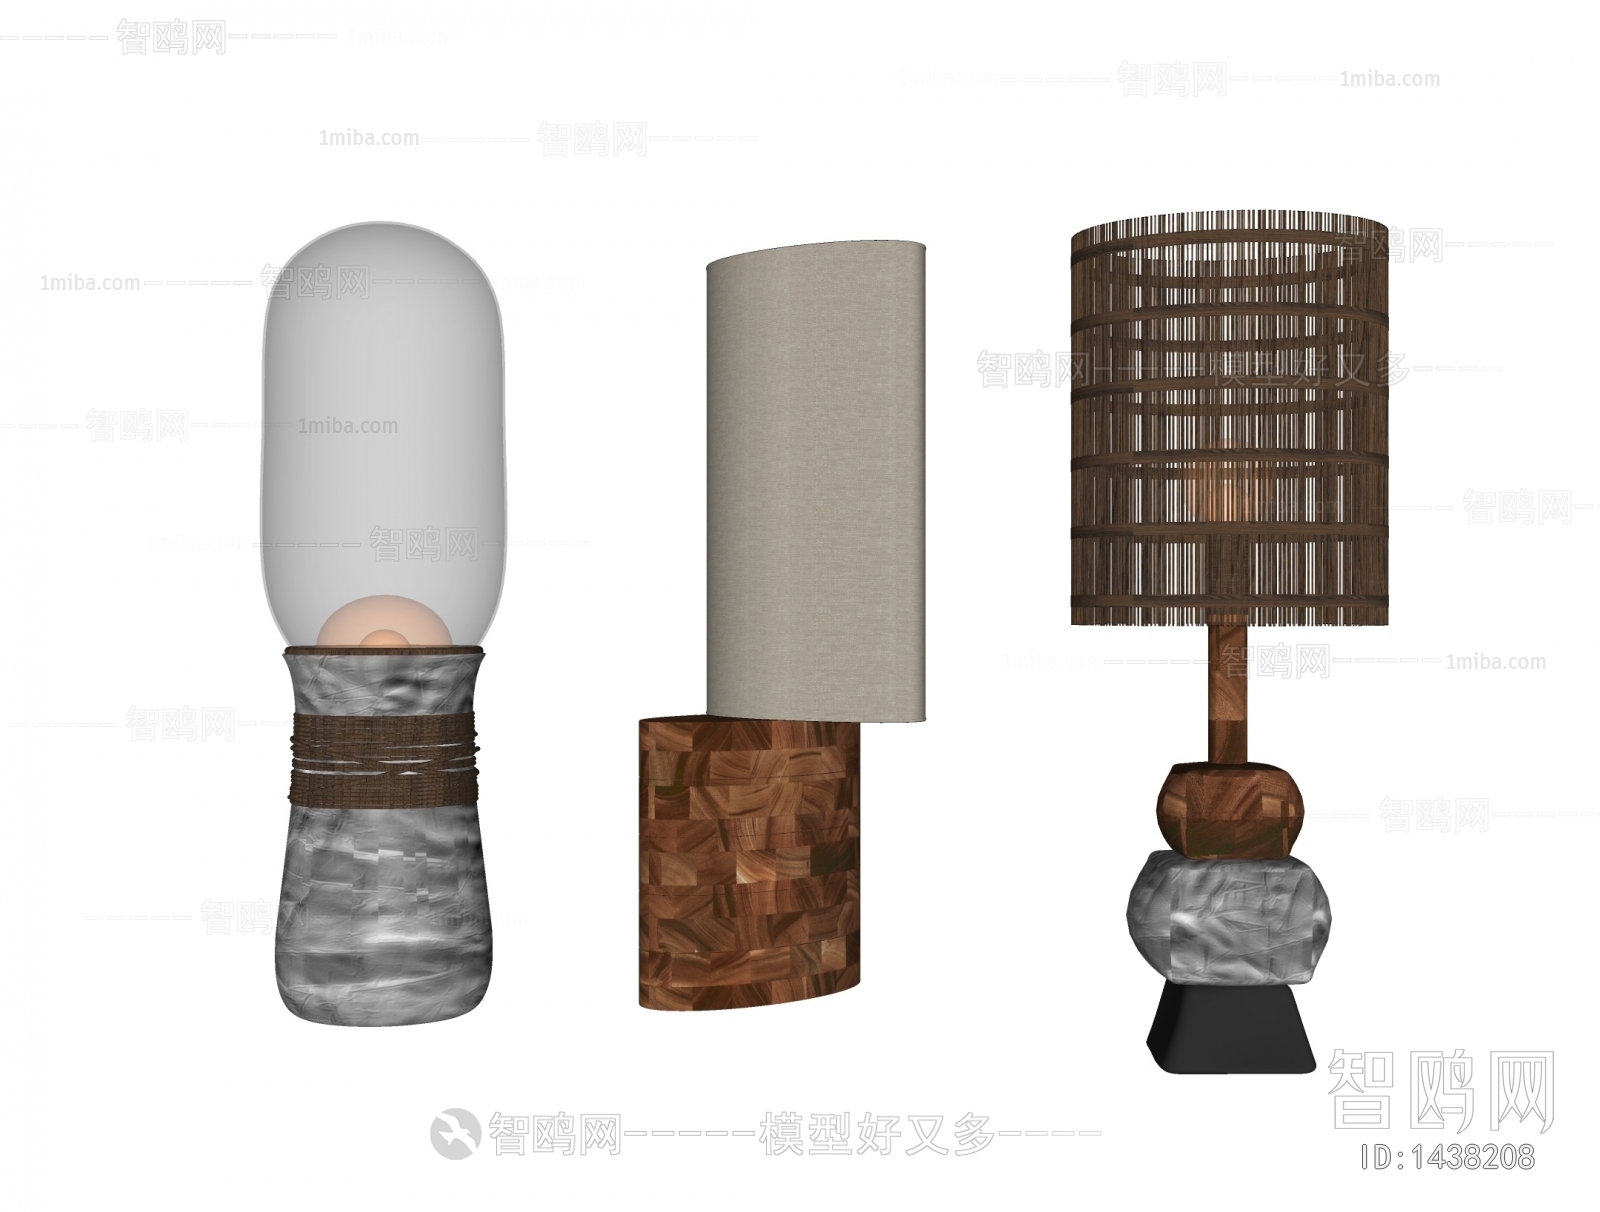 Wabi-sabi Style Table Lamp